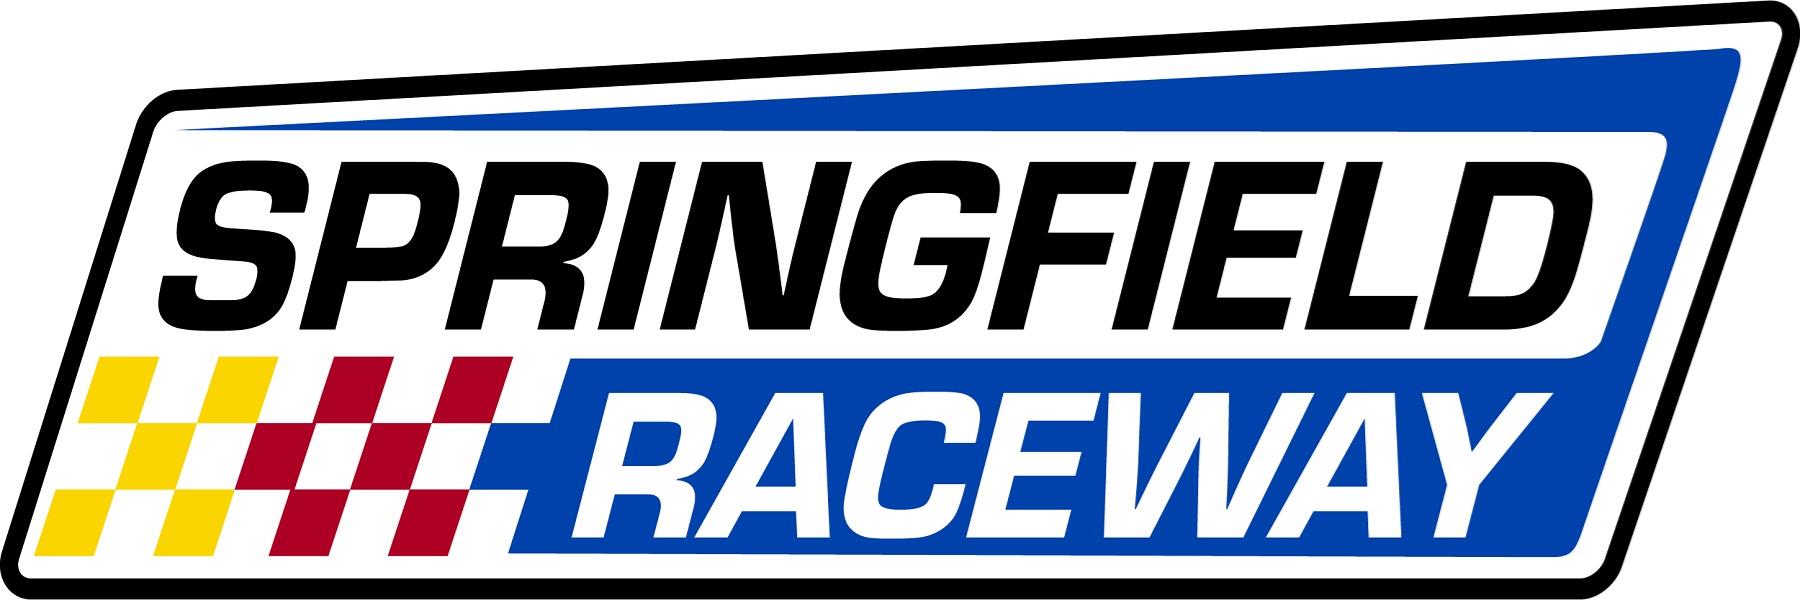 5/29/2021 - Springfield Raceway